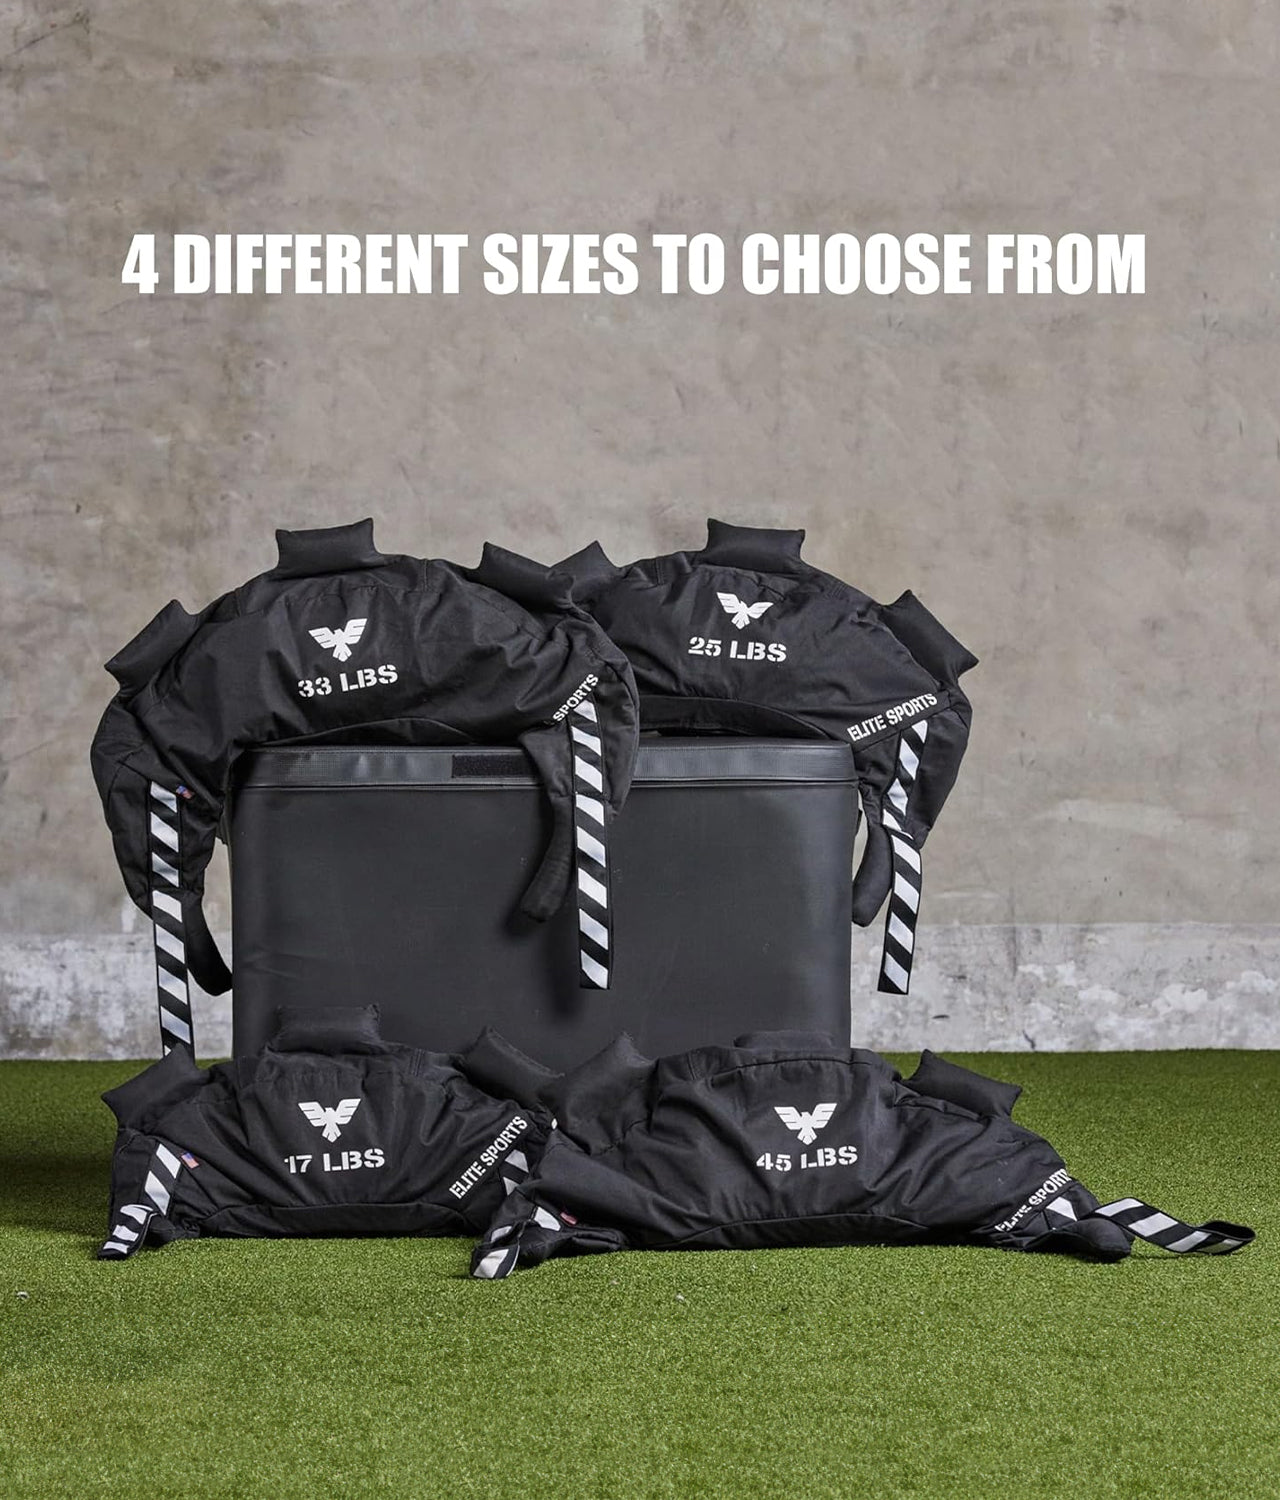 Elite Sports Black Bulgarian Sand Bag 17 Lbs 4Different Sizes to Choose